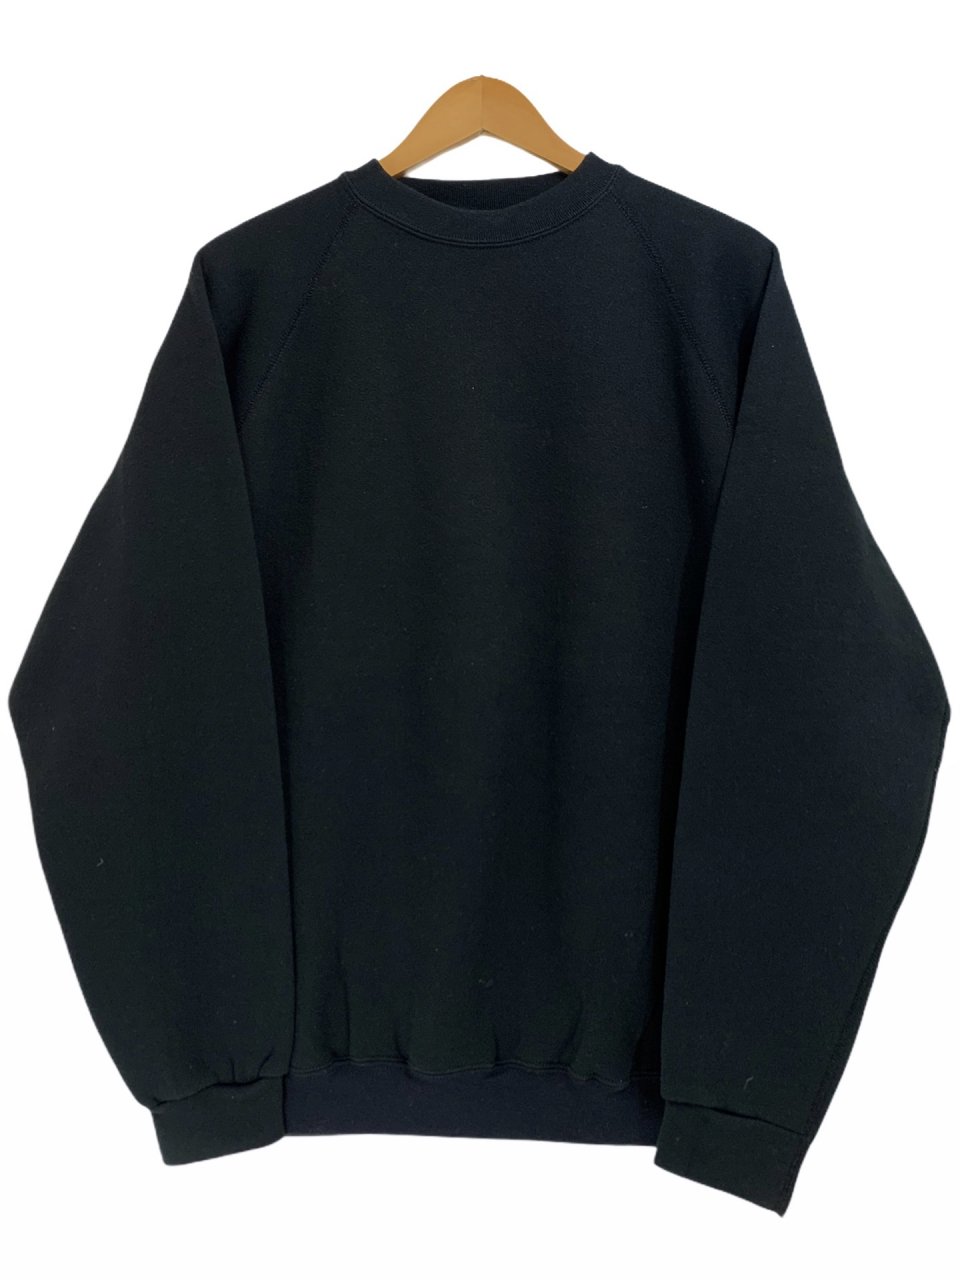 USA製 90s DISCUS ATHLETIC Plain Sweatshirt 黒 L ディスカス